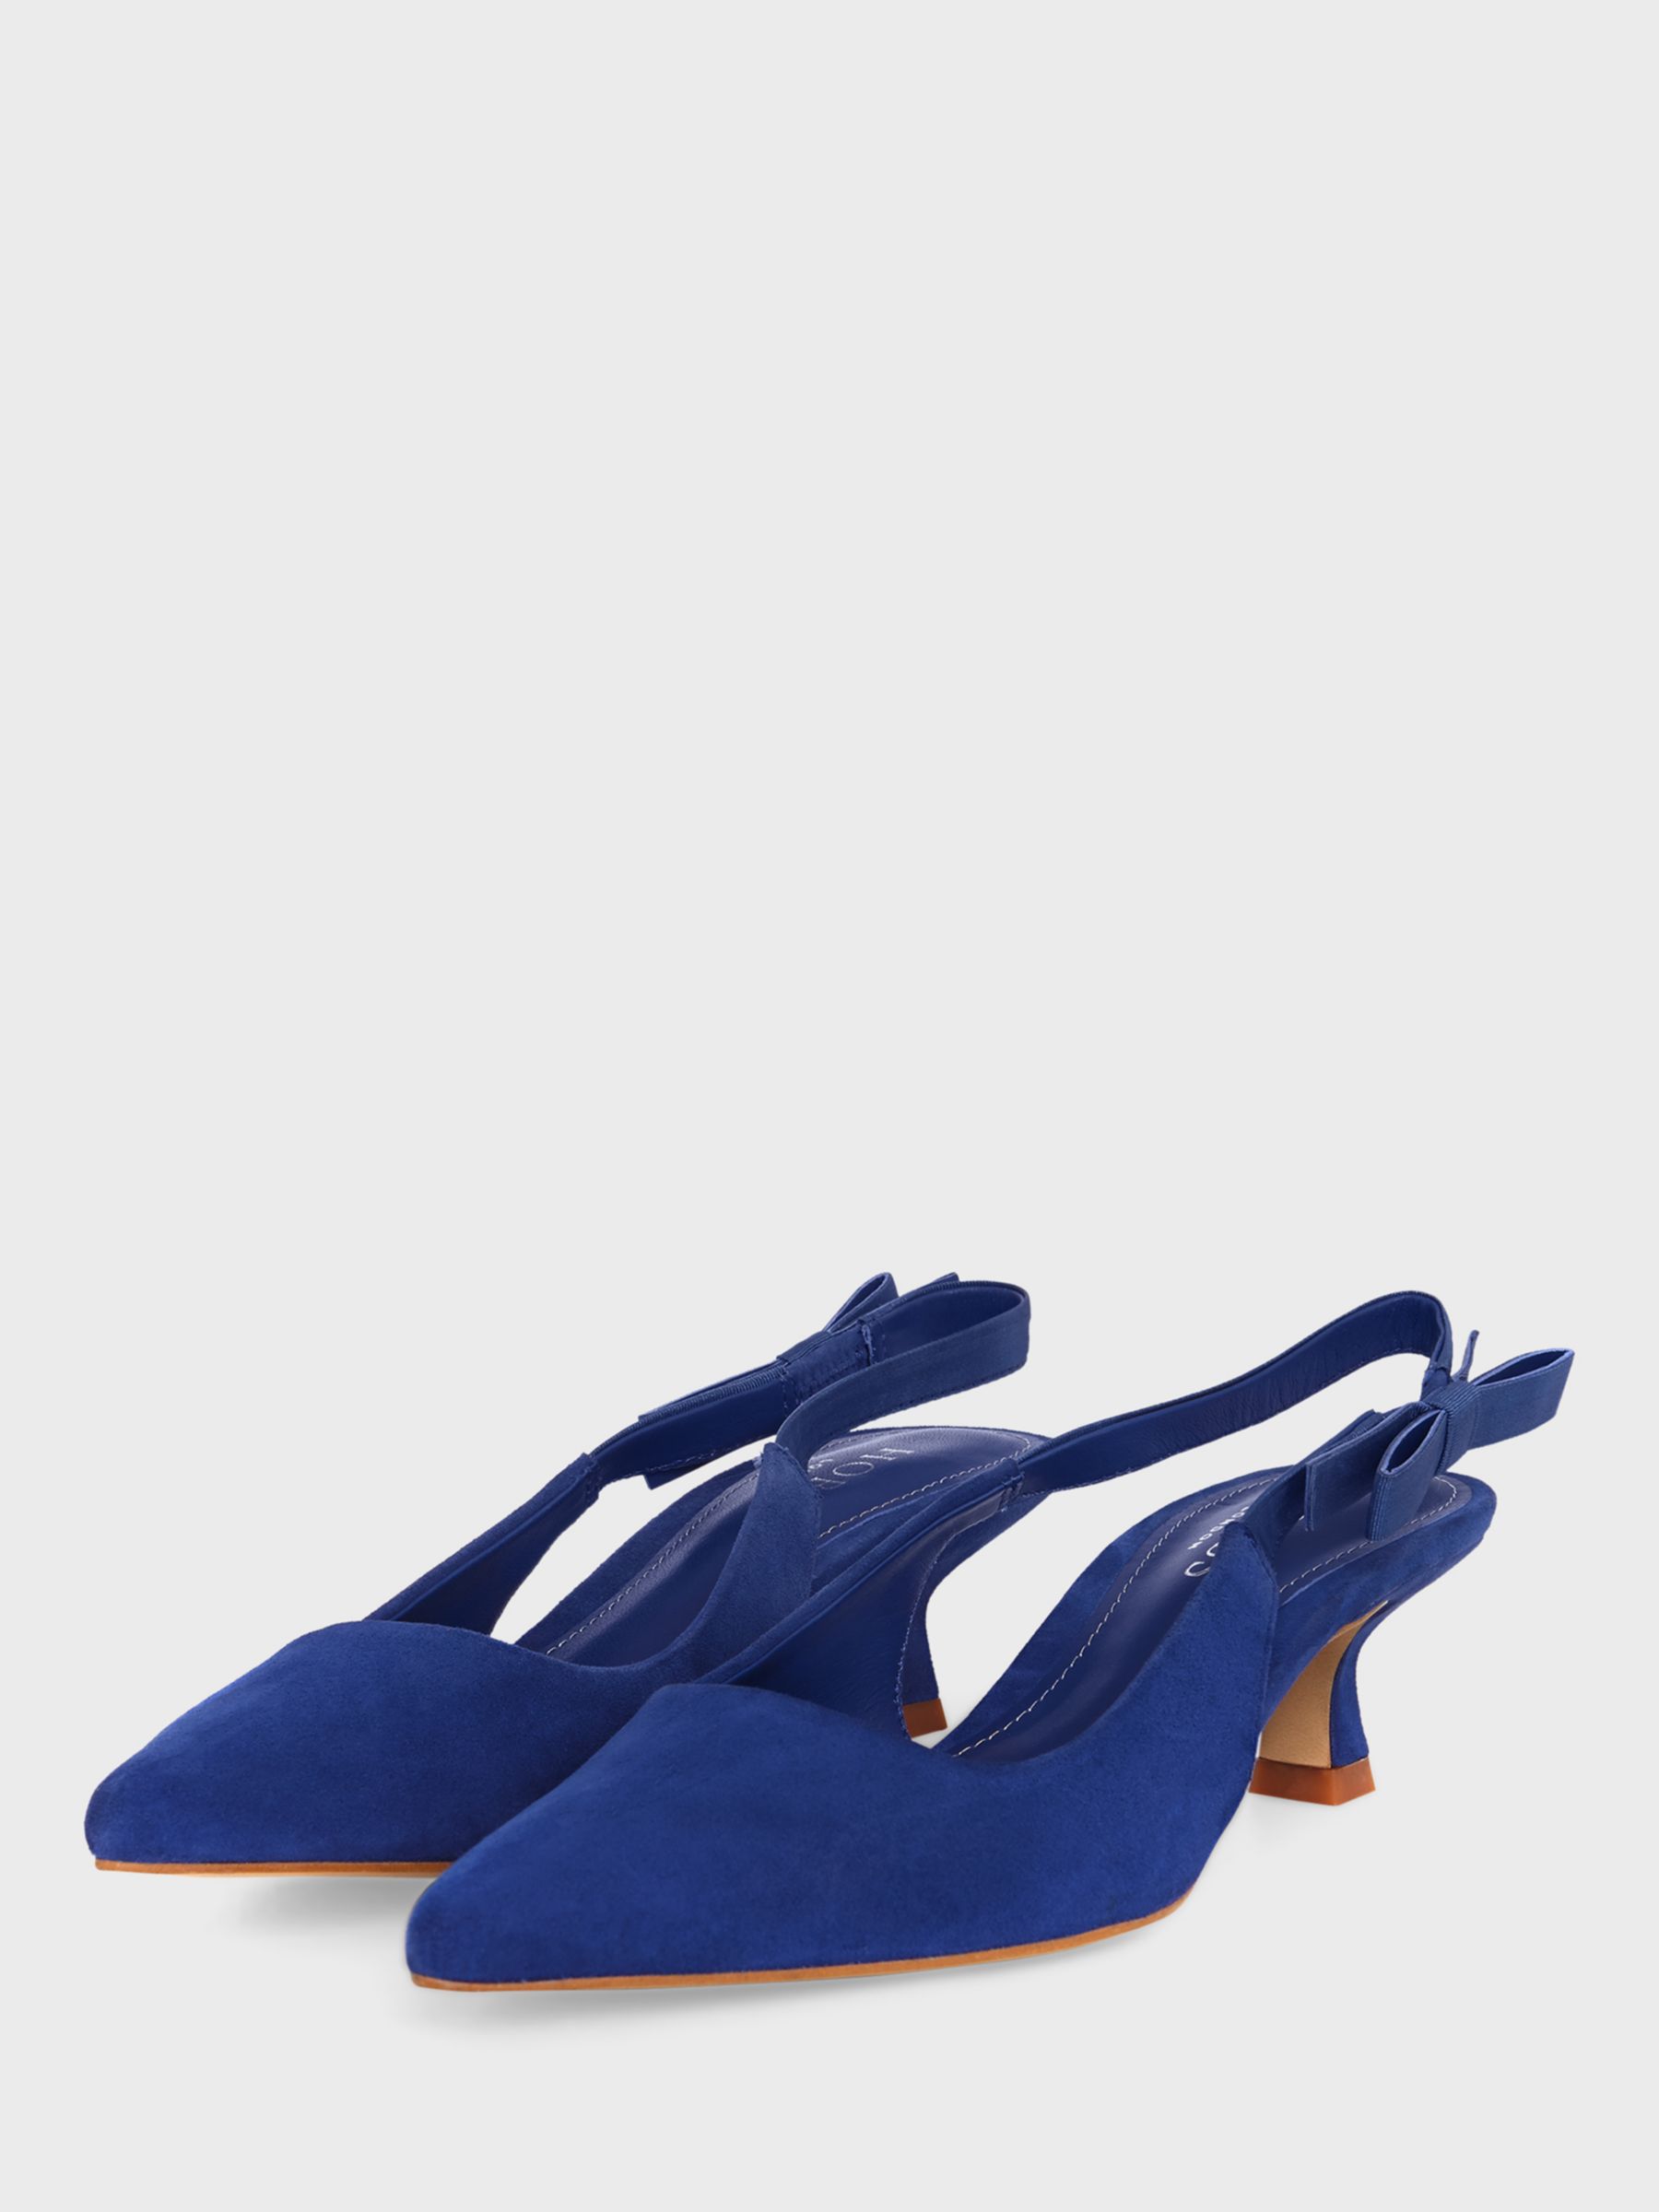 Hobbs Safia Suede Slingback Kitten Heel Court Shoes, Lapis Blue, 3